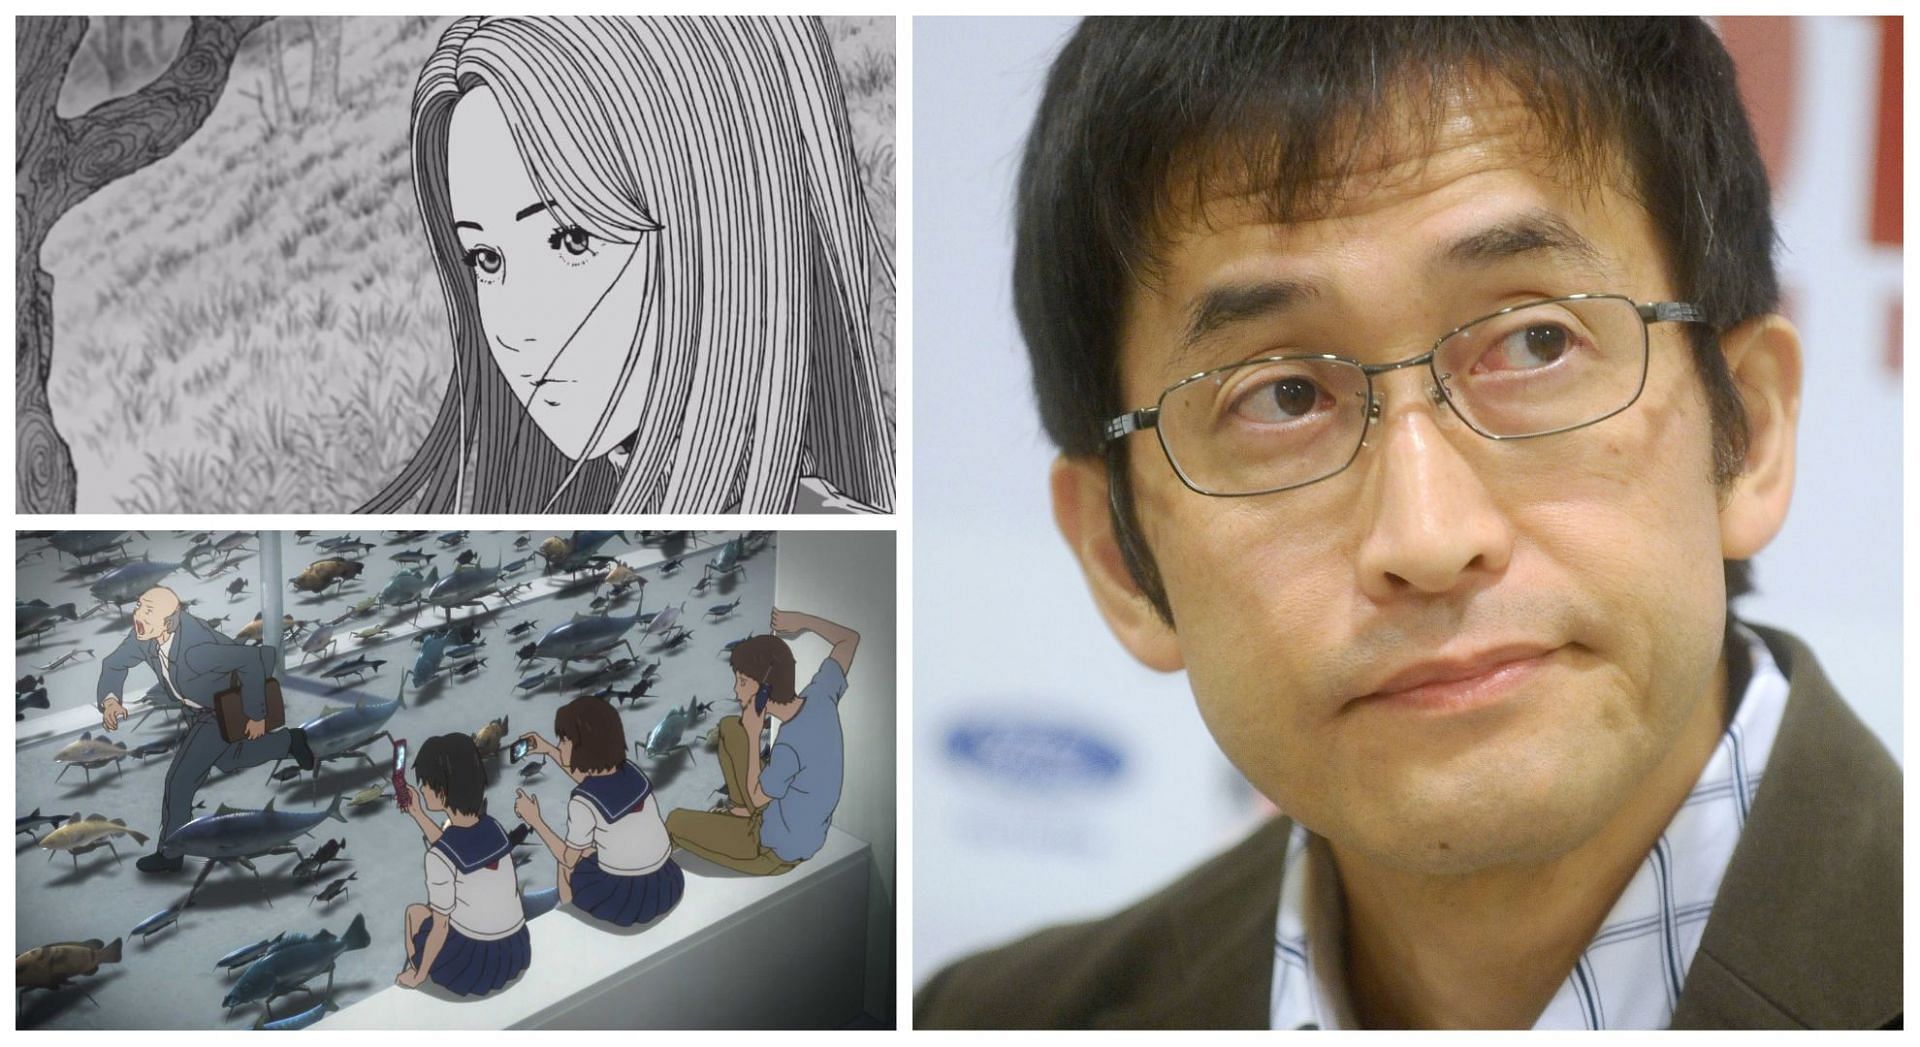 The 13 Most Terrifying Junji Ito Manga Stories